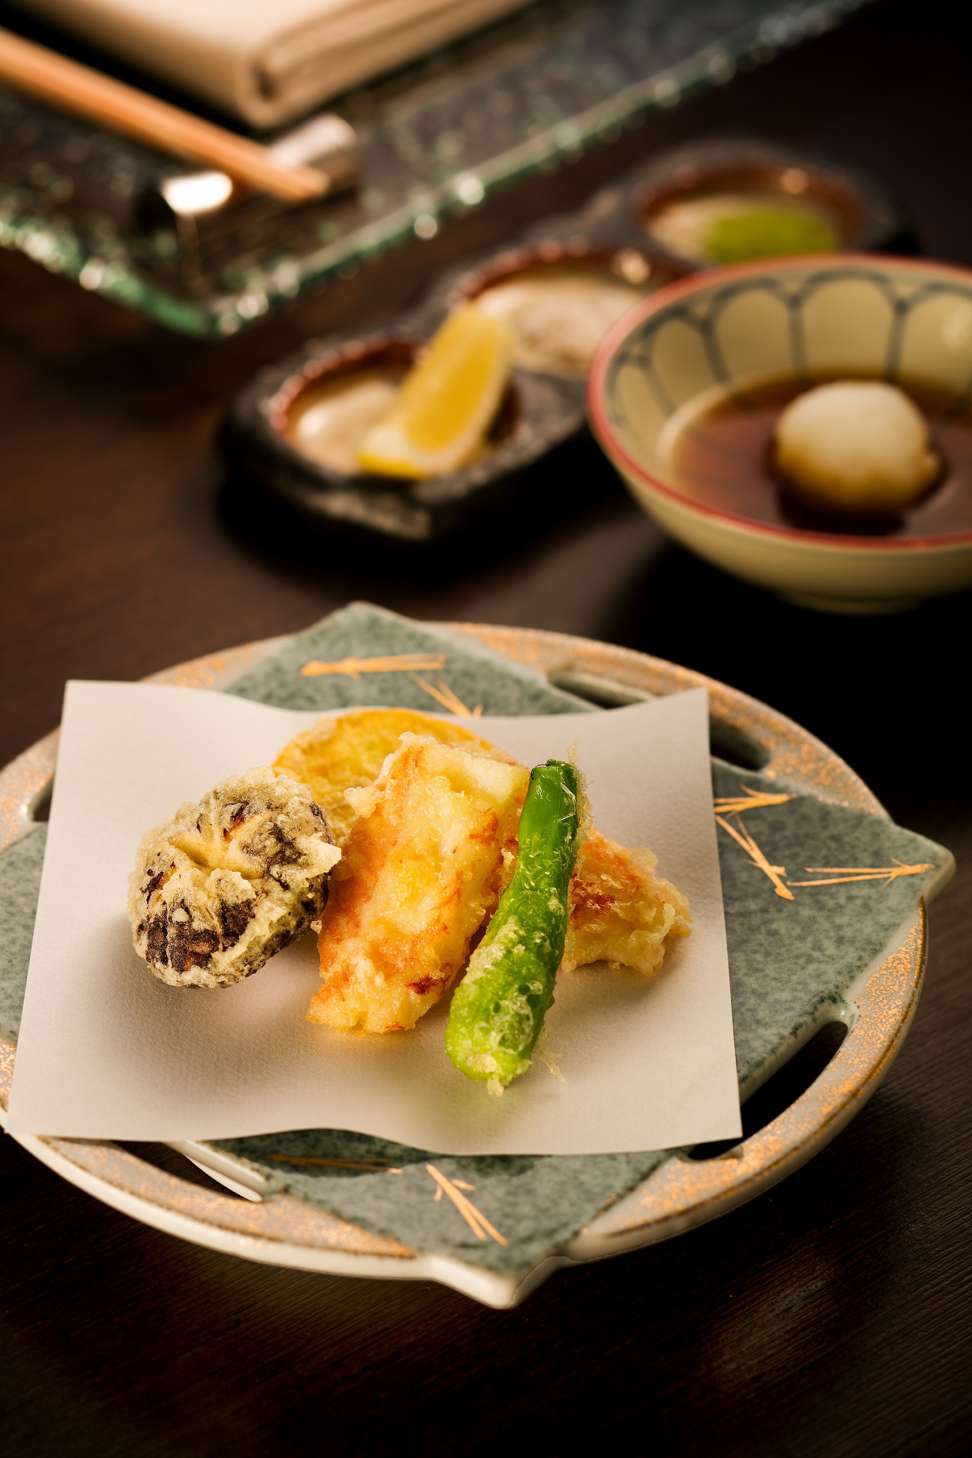 The mixed vegetable tempura from Ina by Inagiku.